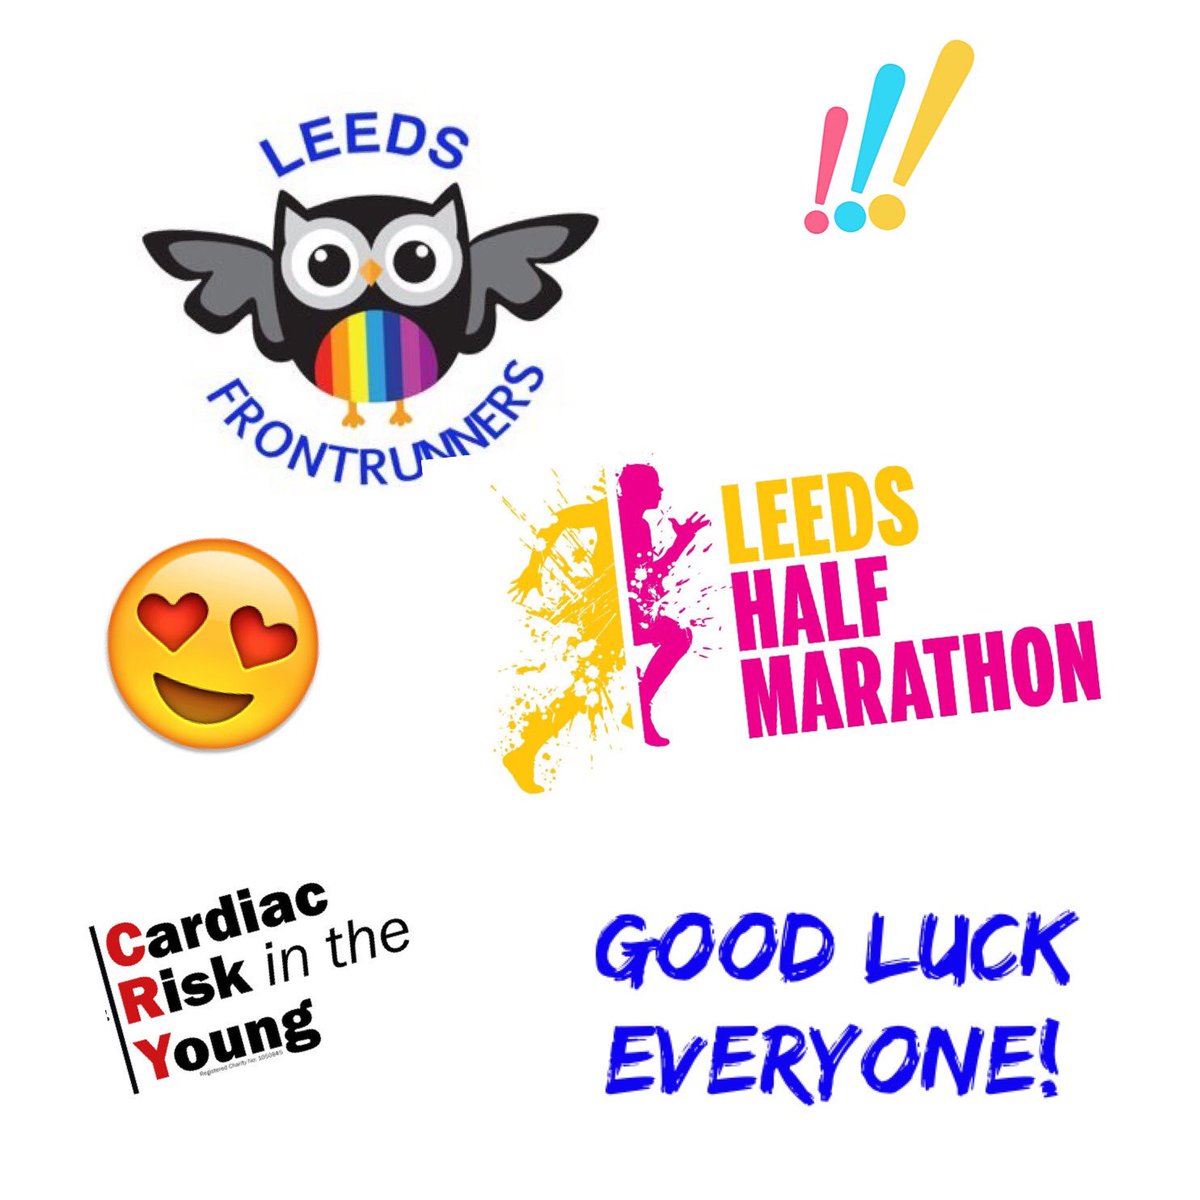 We have lots of club members in the #LeedsHalfMarathon today, give us a wave! #Leeds #LeedsHalf @runforall #goodluck